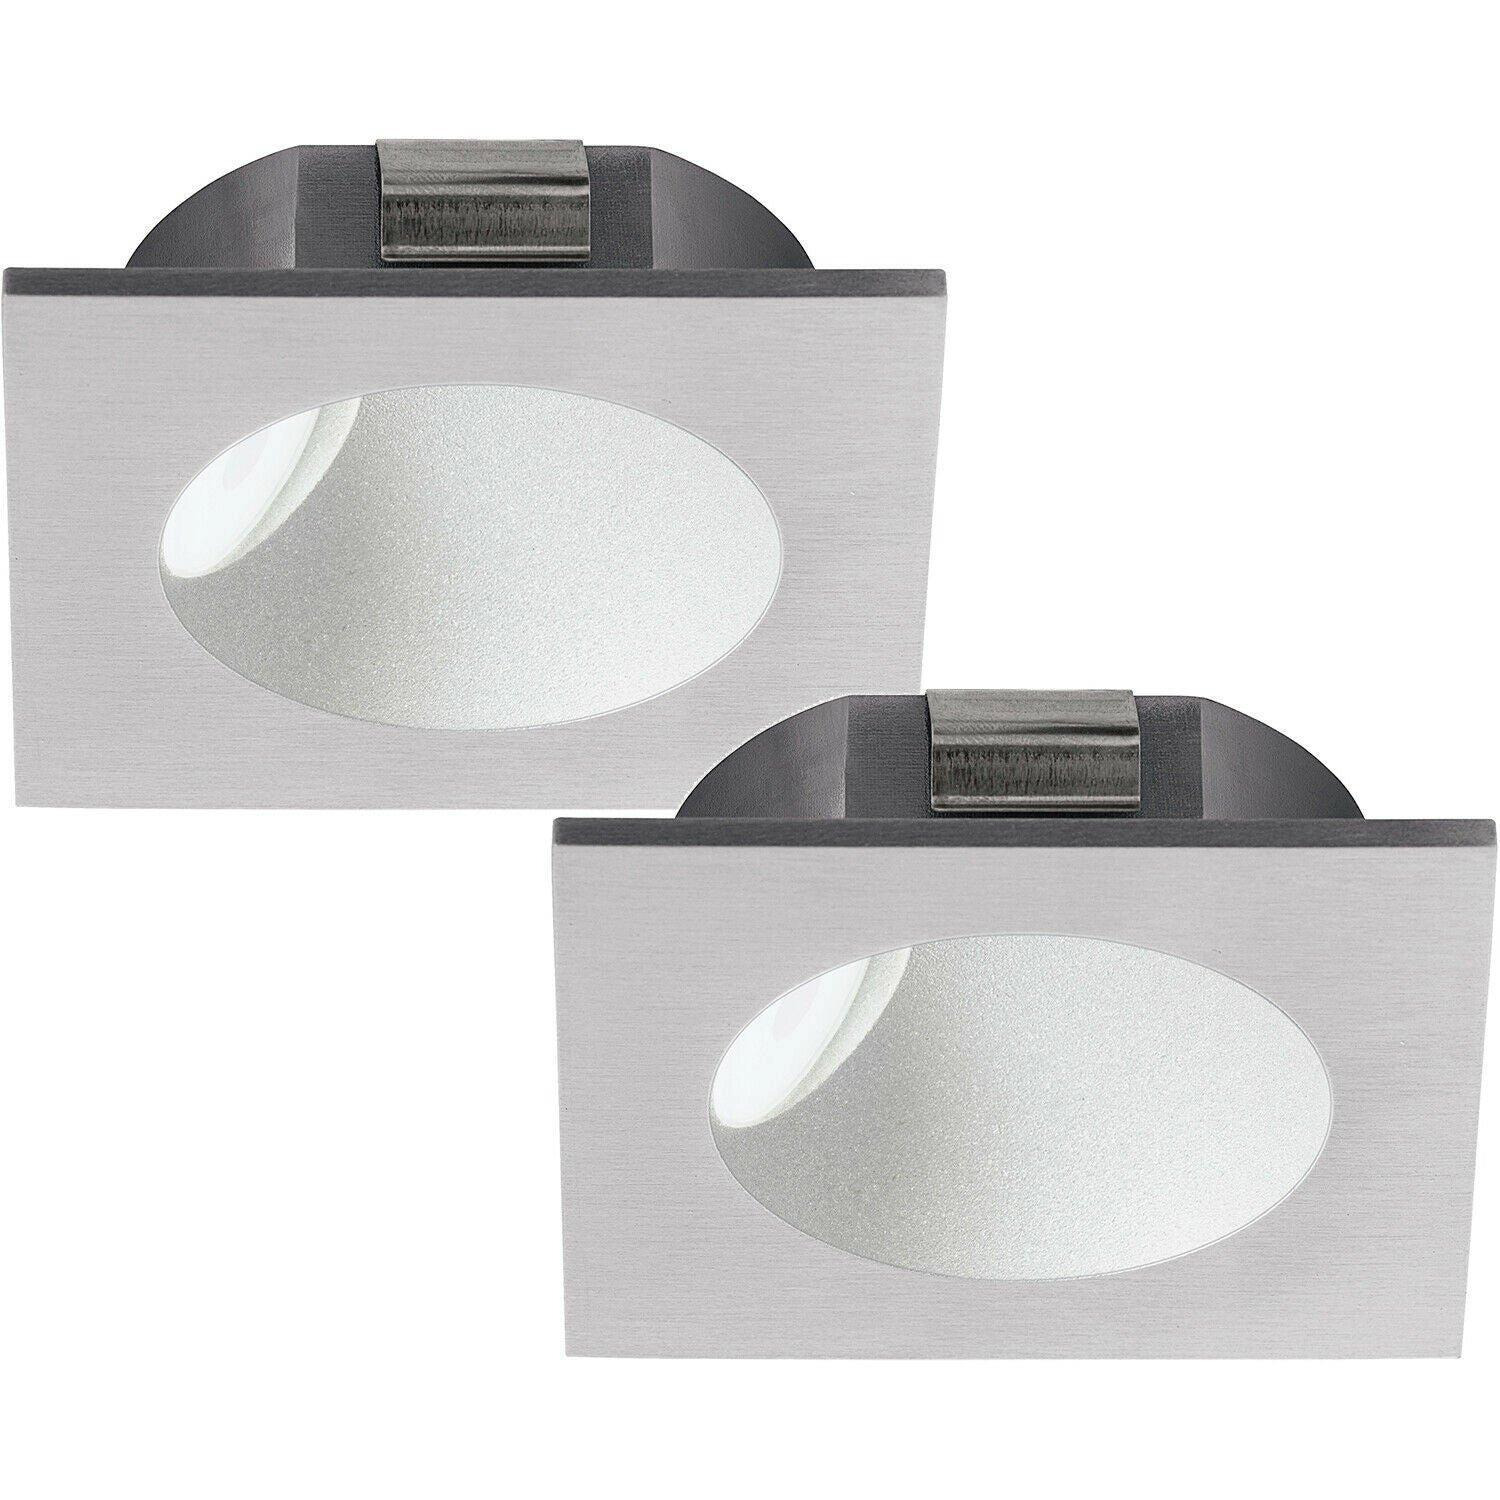 2 PACK Wall / Ceiling Flush Downlight Silver Spotlight Aluminium 2W LED - image 1